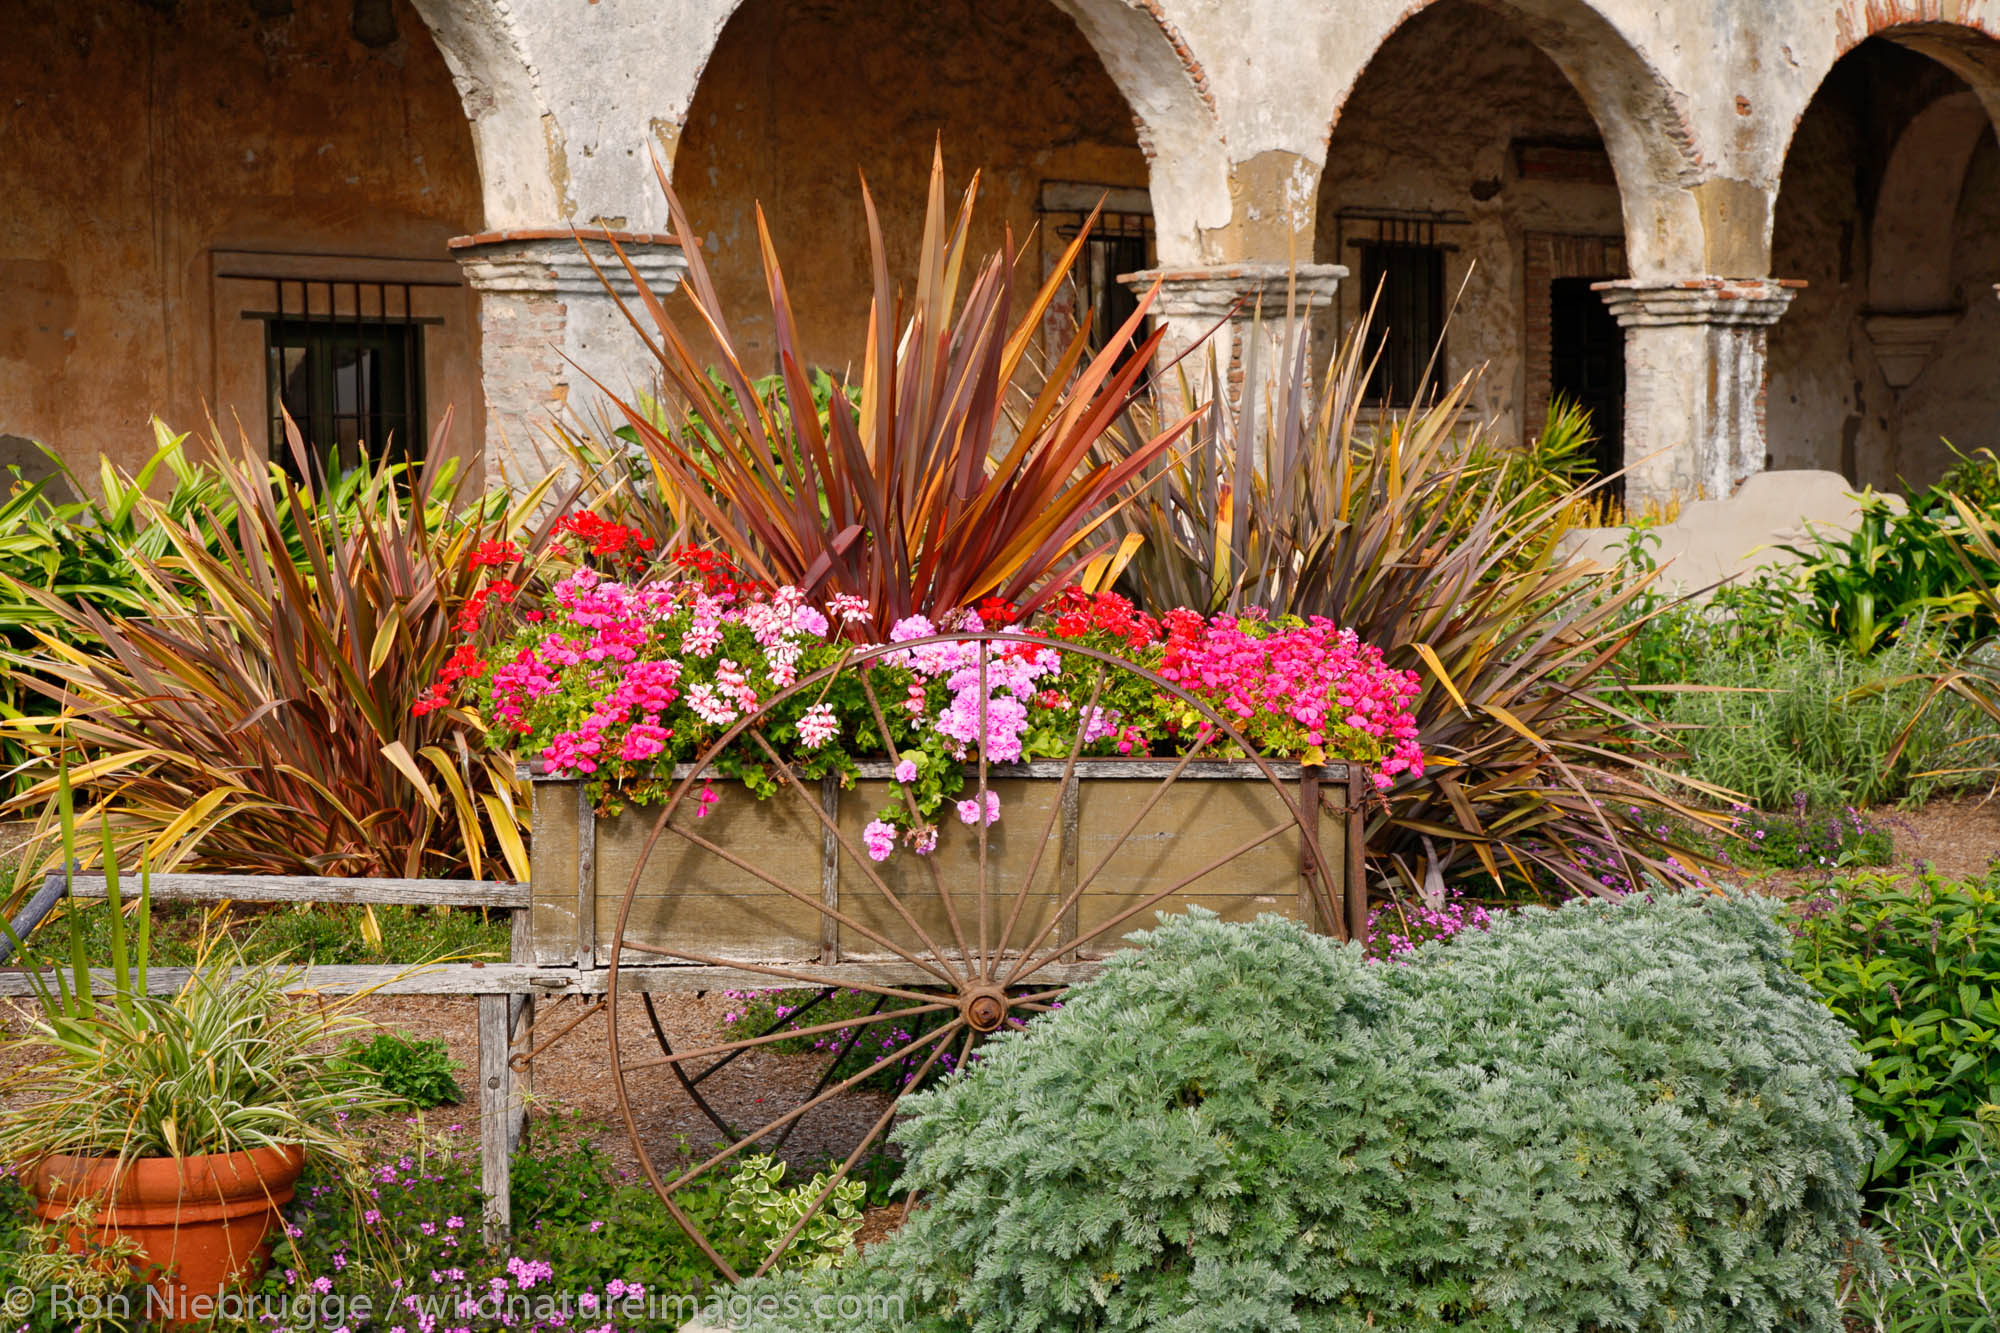 Flowers at the Historic Mission San Juan Capistrano, Orange County, California.